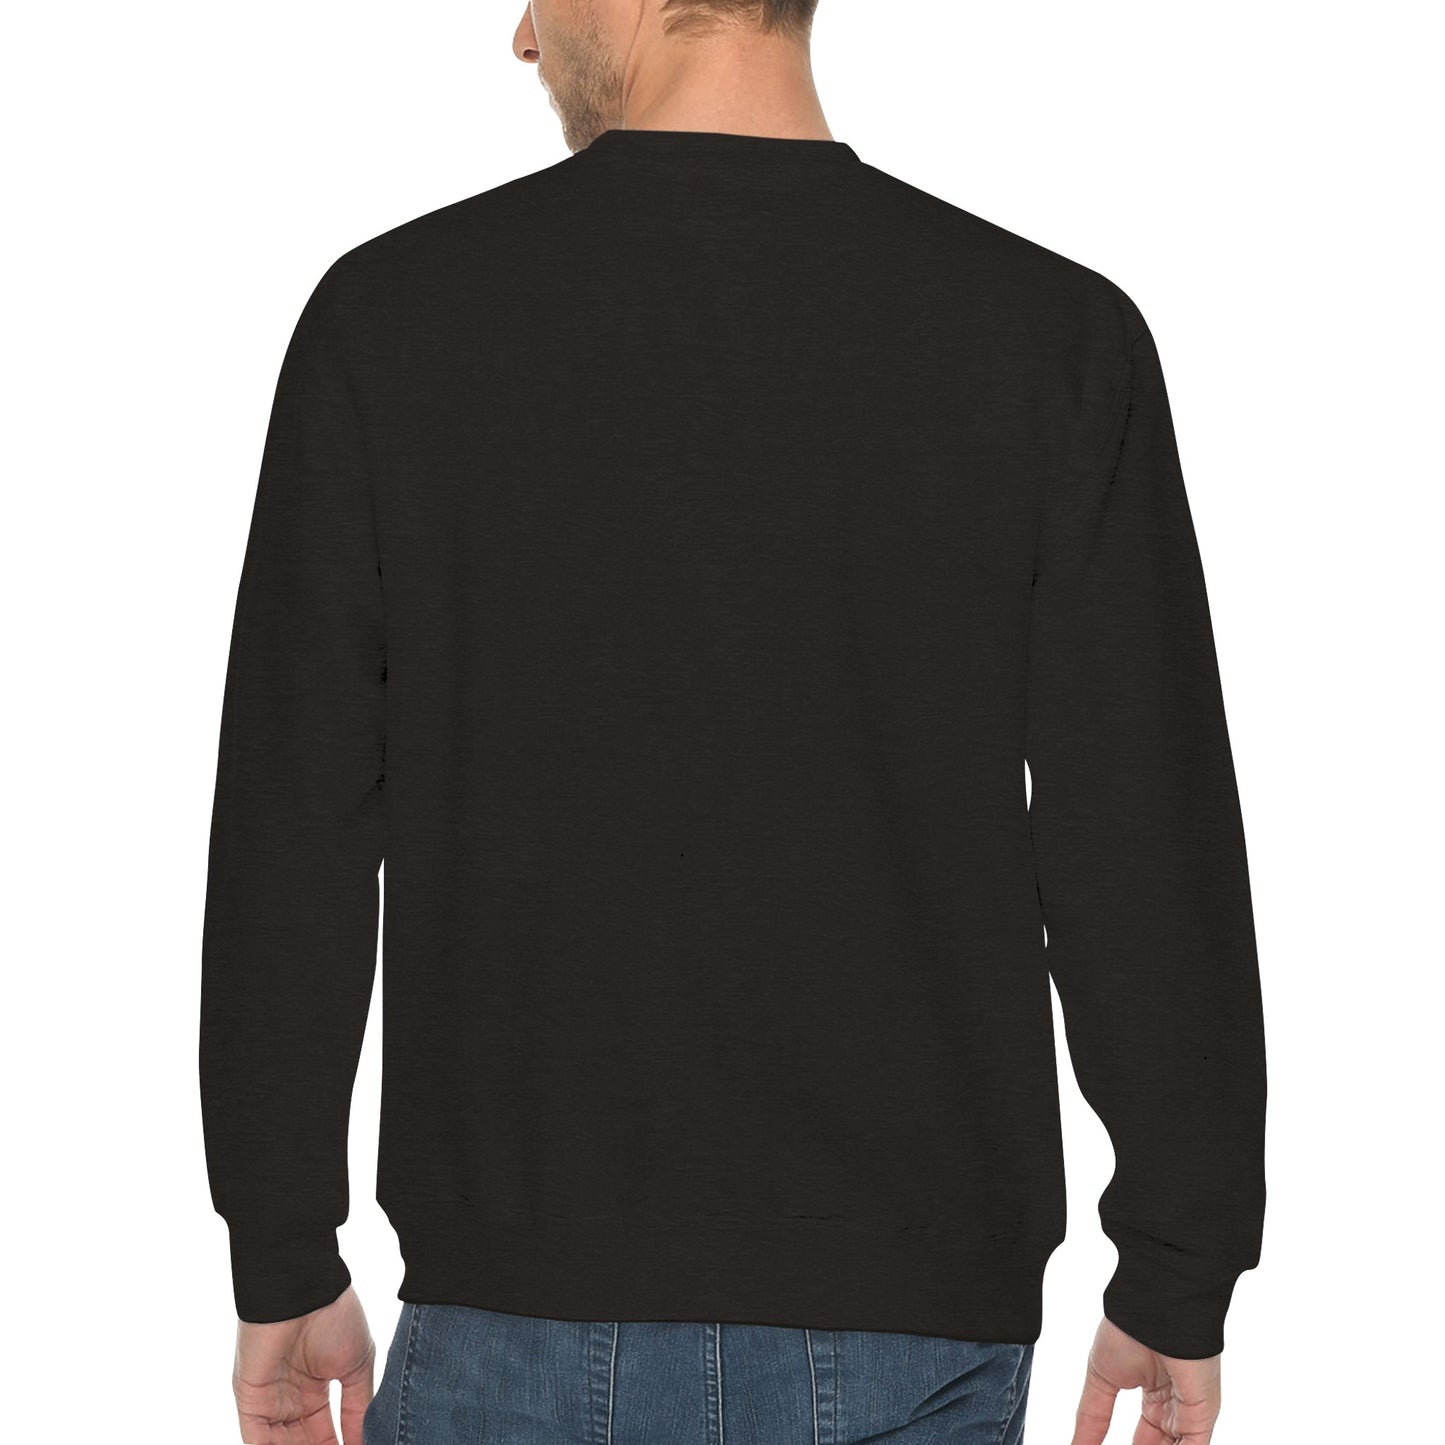 "I MAKE MONSTERS!" Premium Unisex Crewneck Sweatshirt